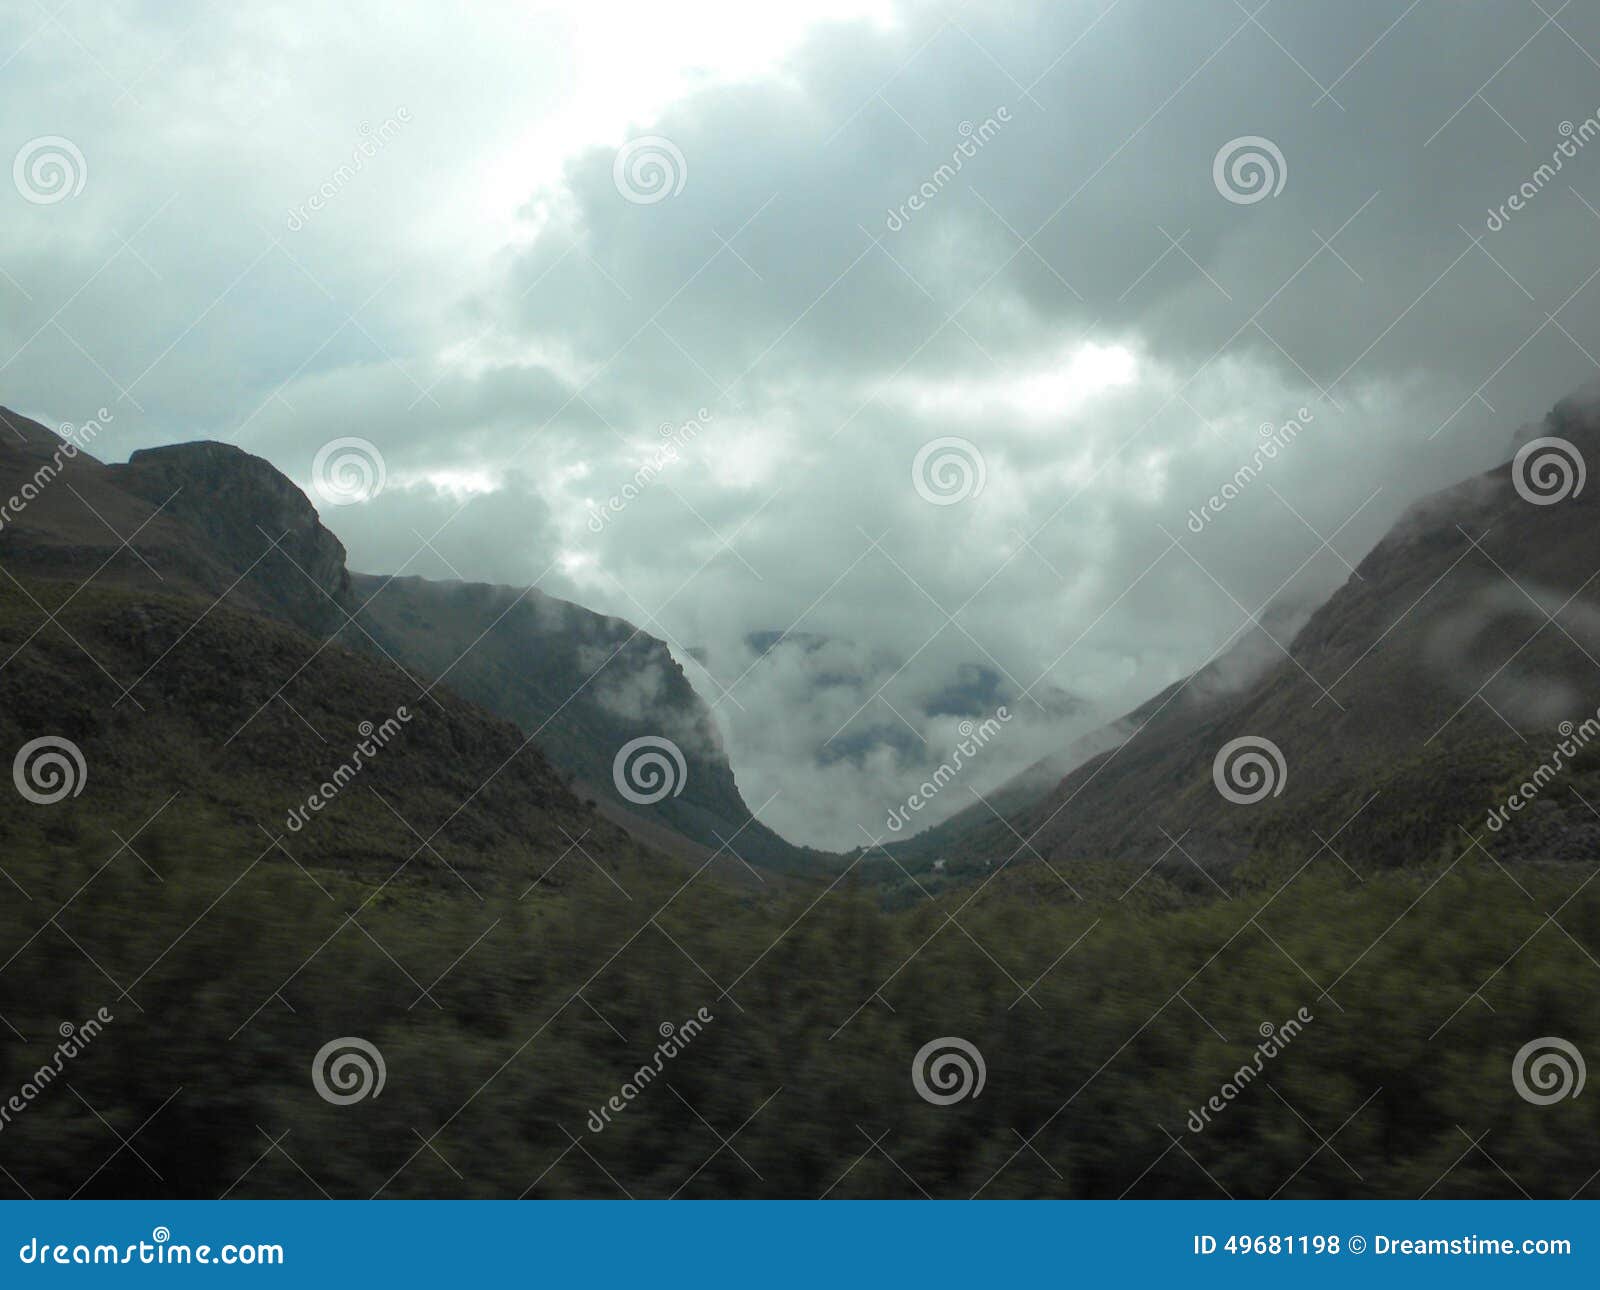 clouds in cajas national park, ecuador